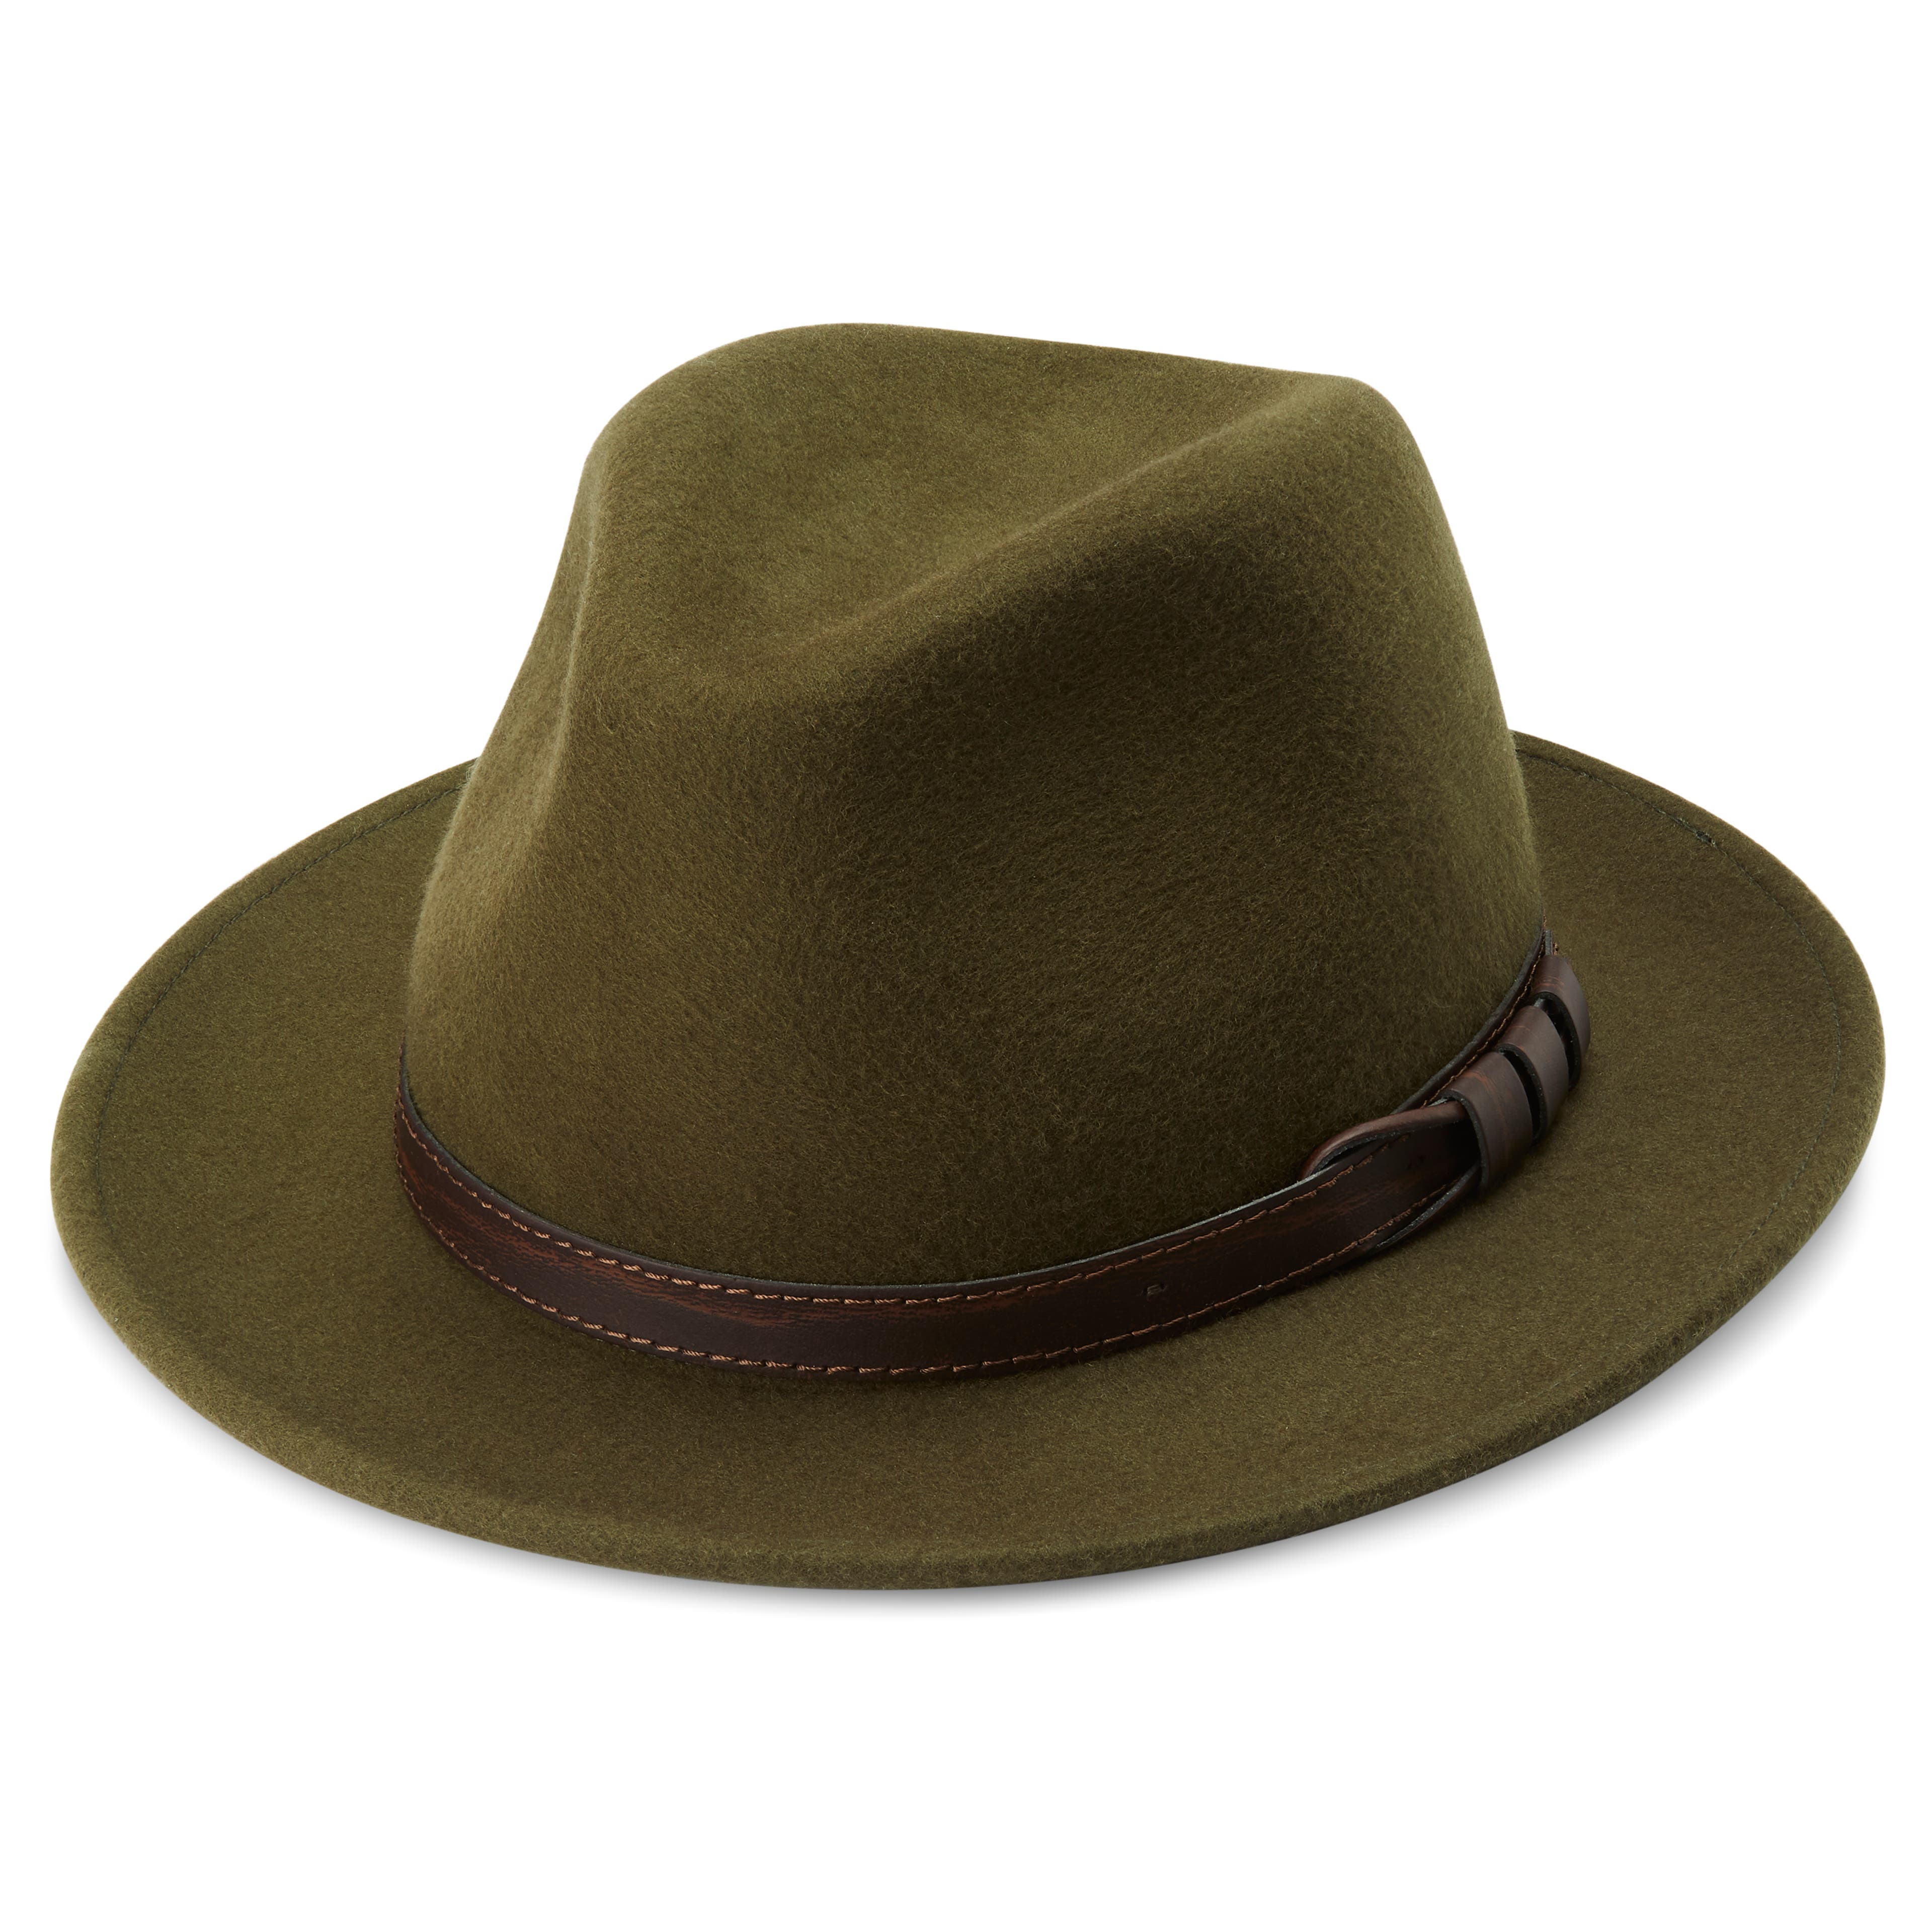 Flavio zelený klobouk Moda Fedora s plochou krempou